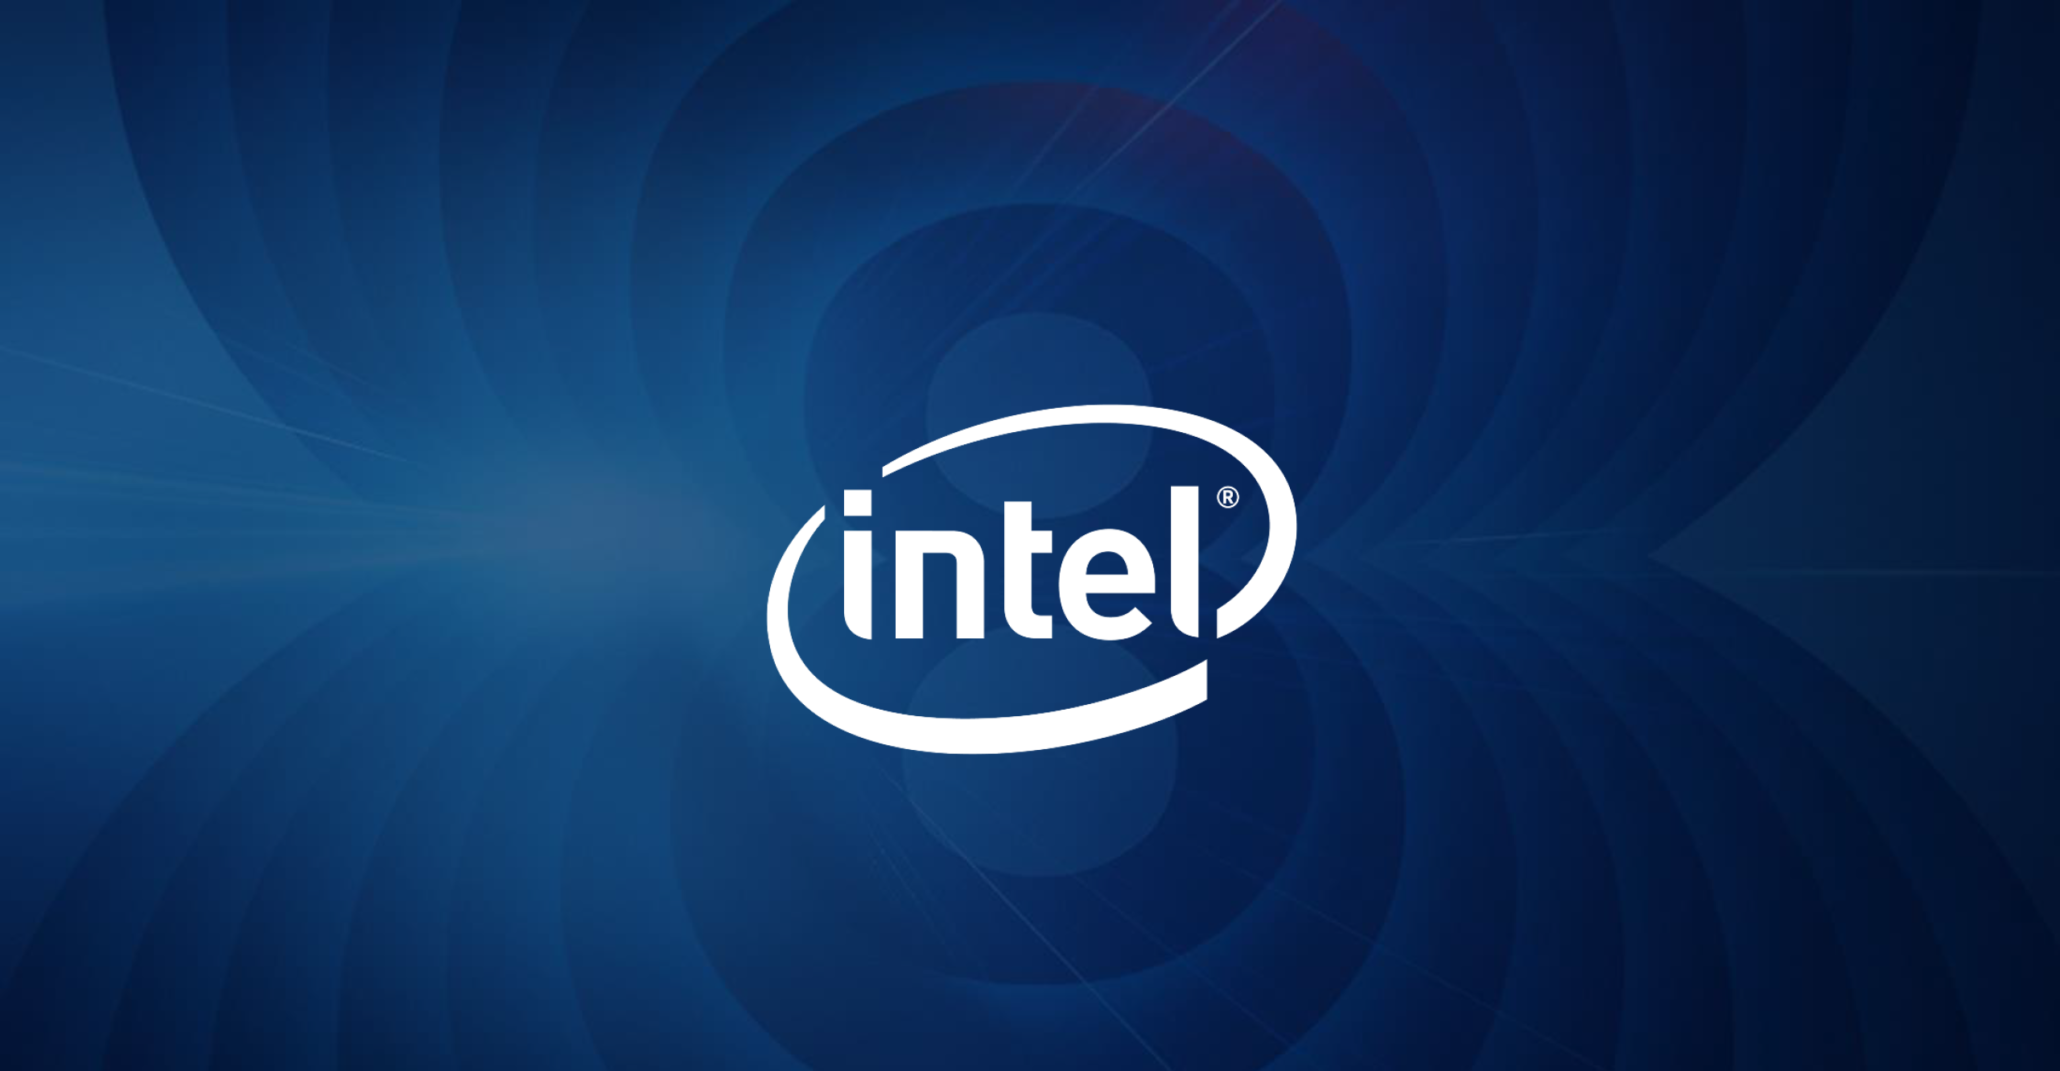 Intel S Coffee Lake 8th Gen Mobile Flagship And New Desktop Cpus Leak